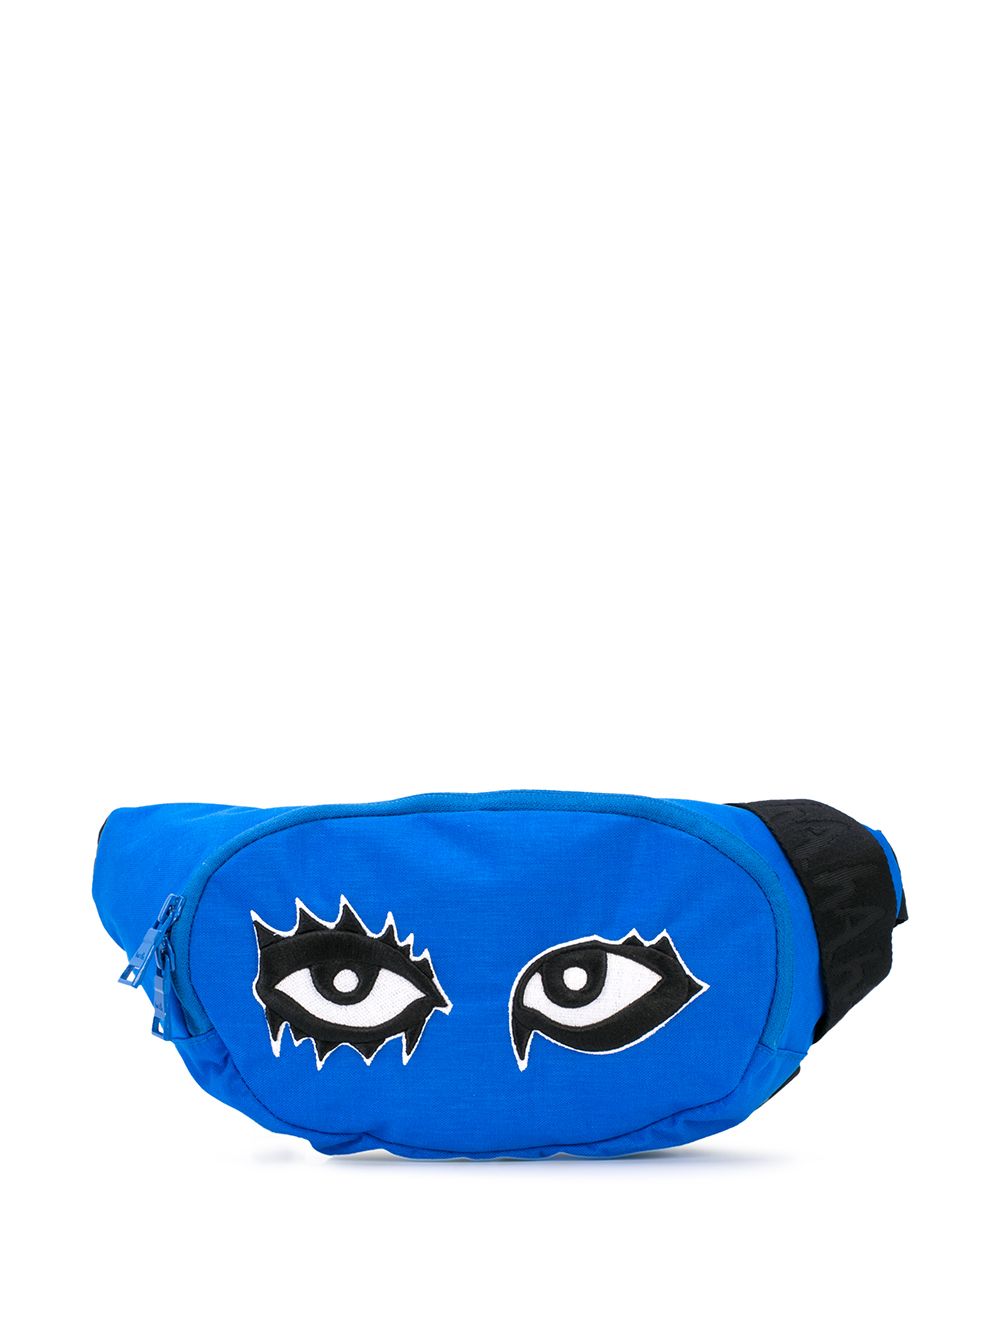 Signature Eyes belt bag